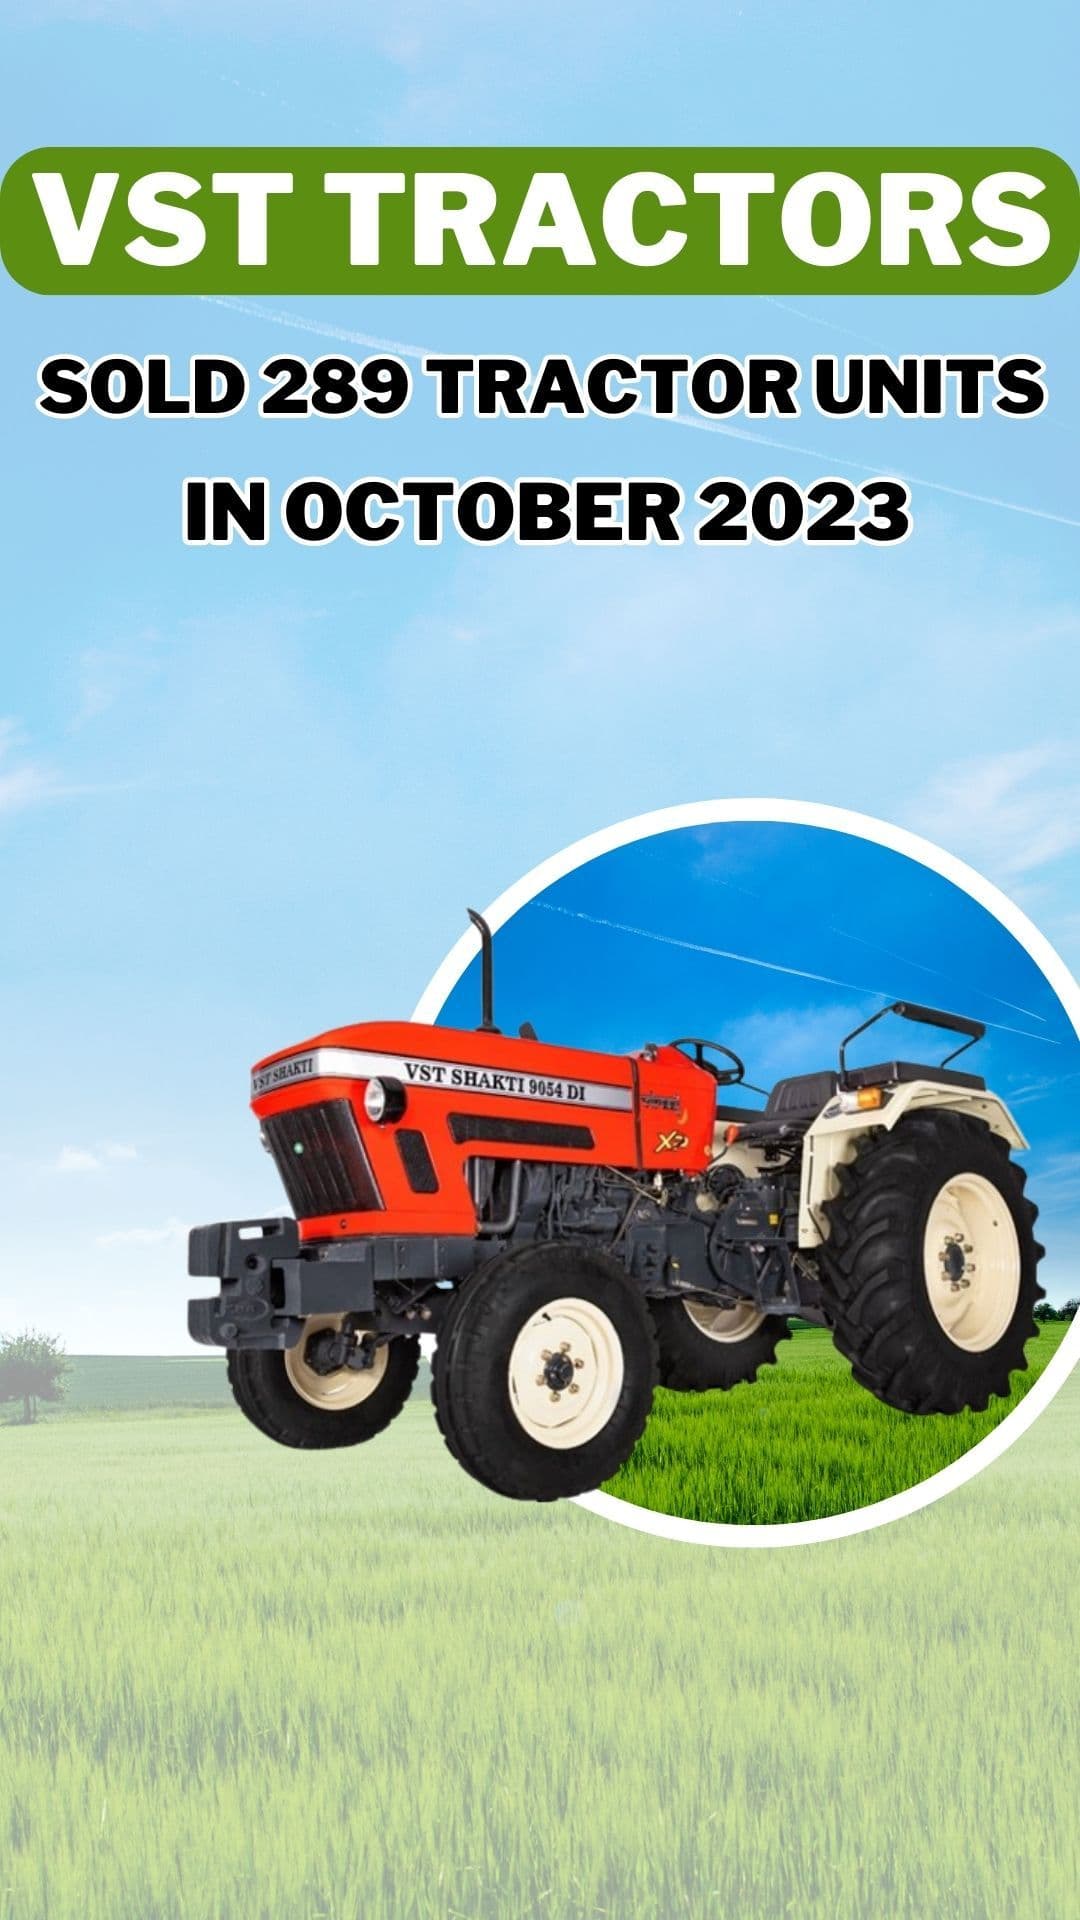 vst-tractors-sold-289-tractor-units-in-october